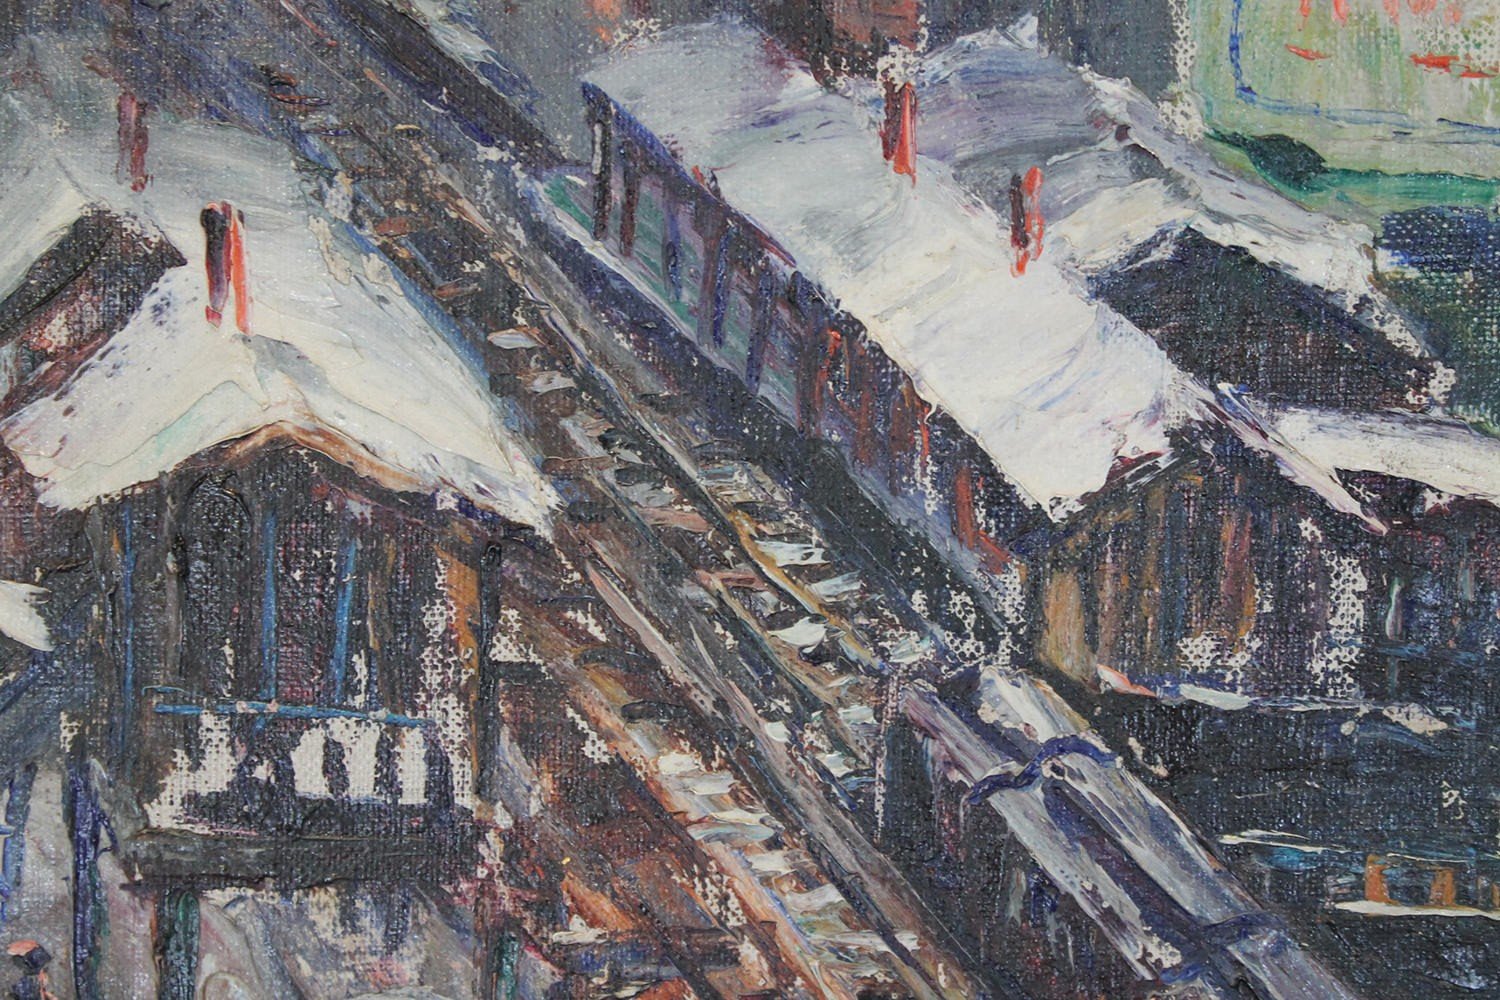 Rail Scenes, New York City by Louis Bosa